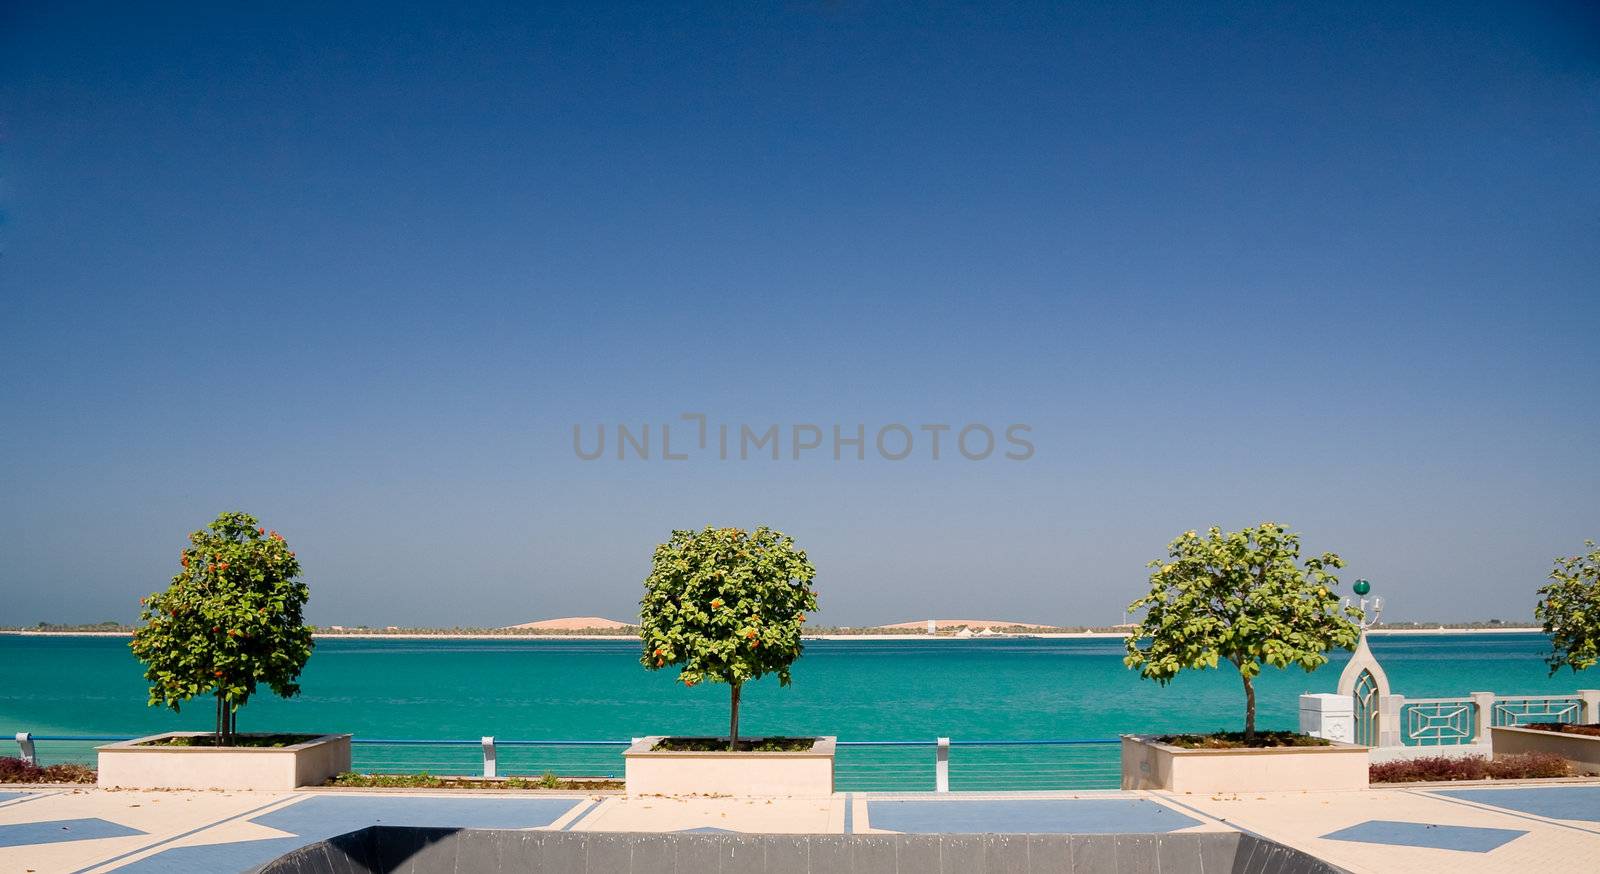 Promenade by sea in Abu Dhabi by steheap